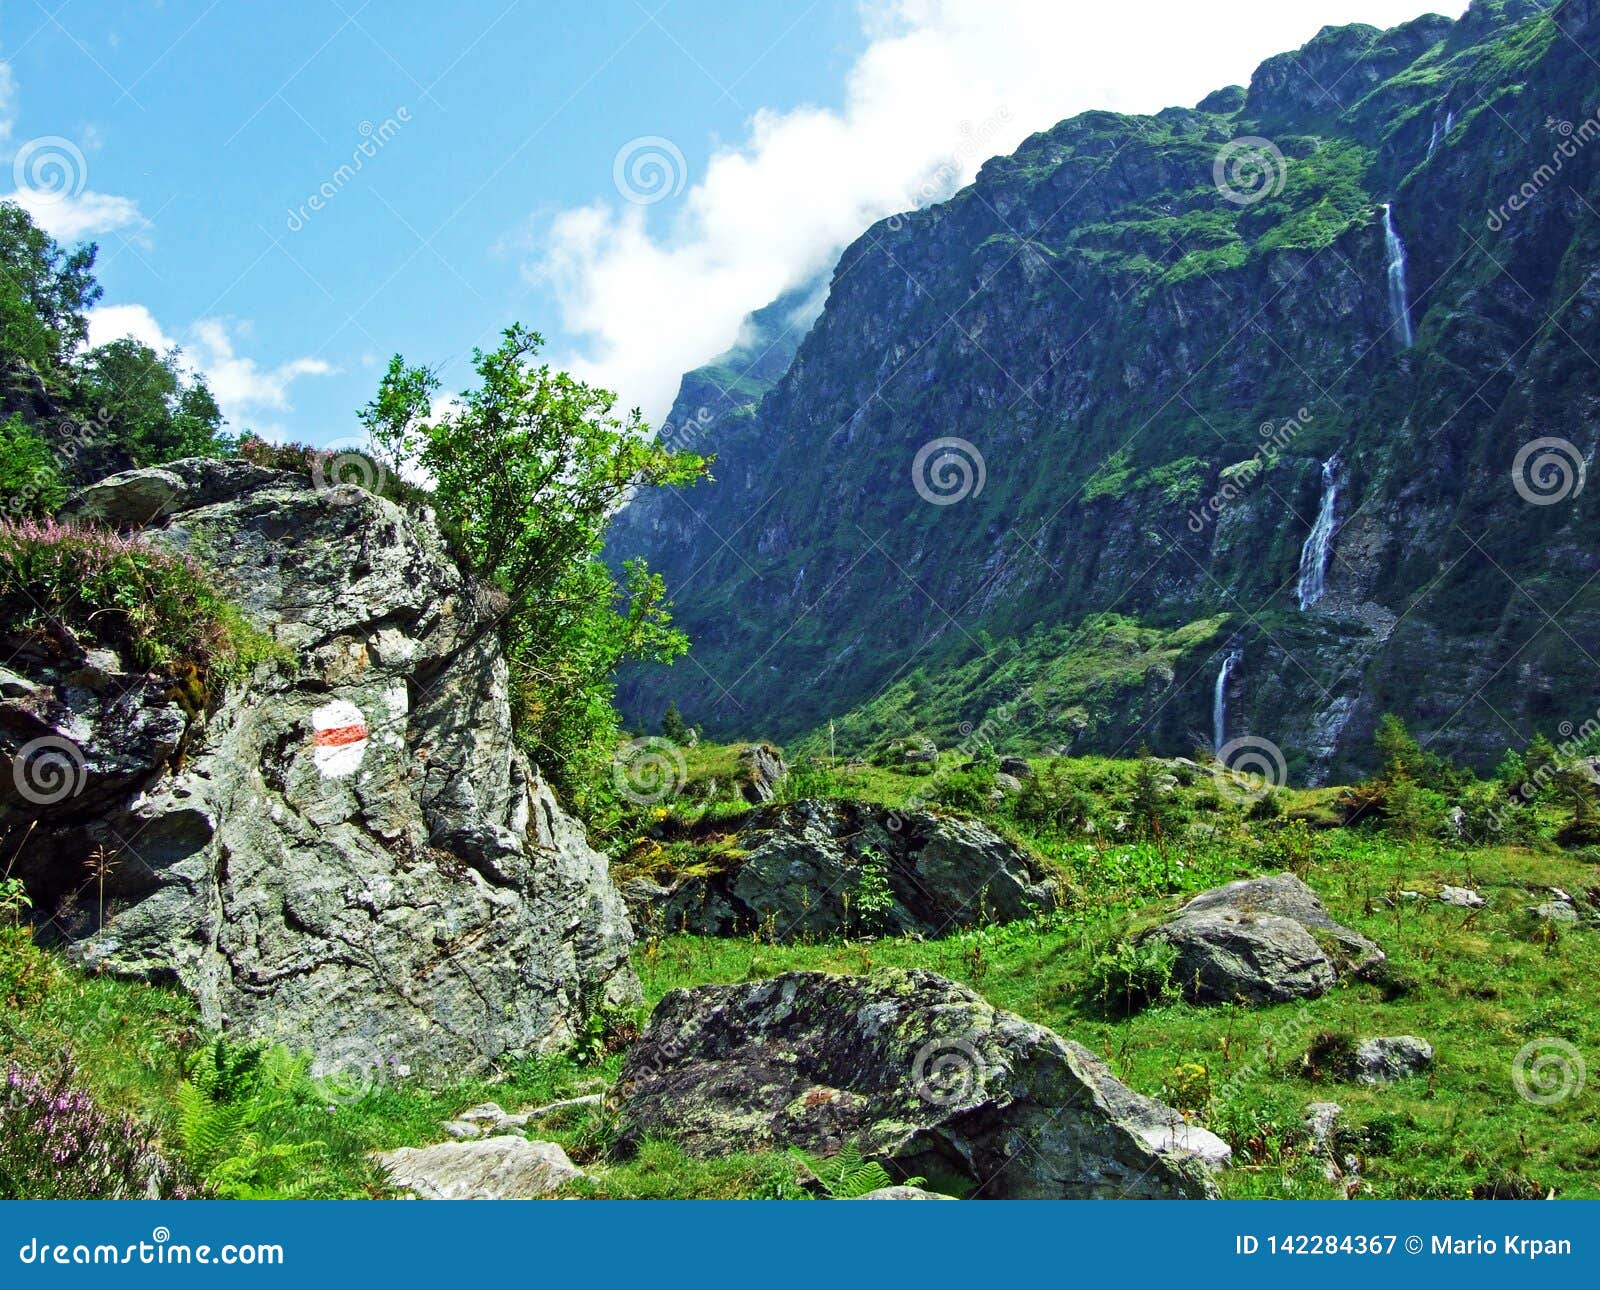 waterfall lammerbachfall or wasserfall lammerbachfÃÂ¤lle, lammerbach stream in the alpine valley of maderanertal